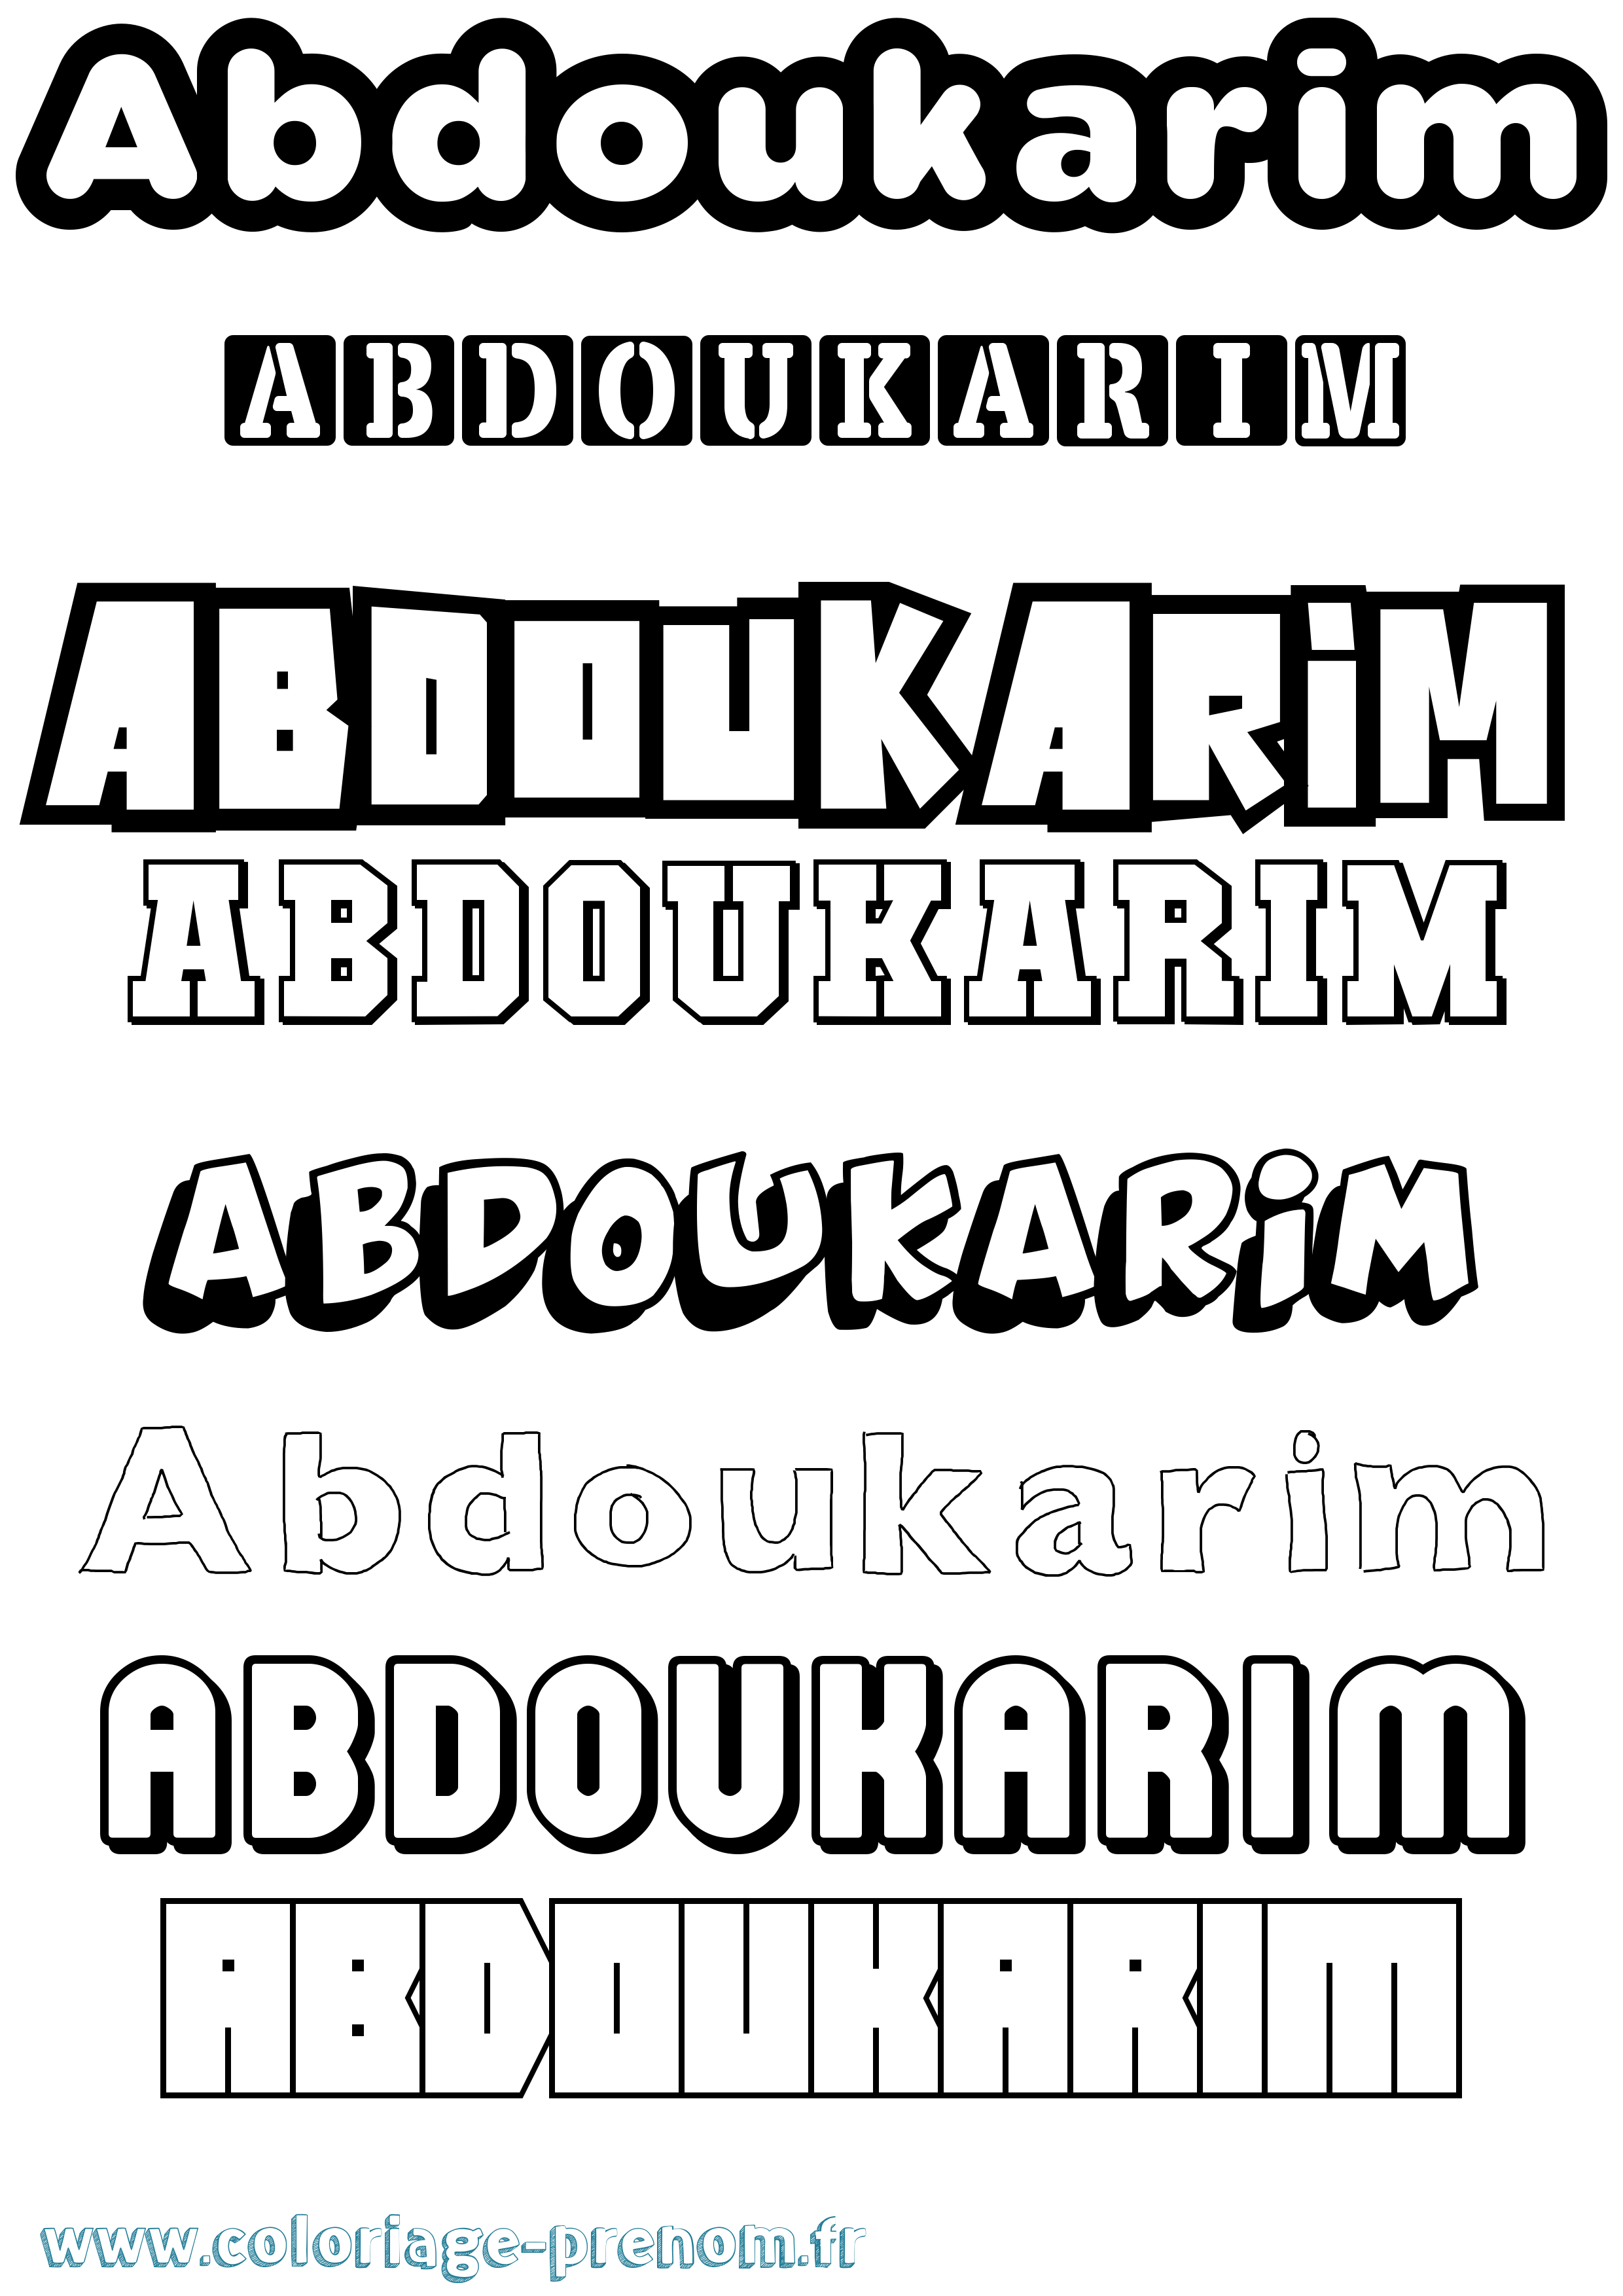 Coloriage prénom Abdoukarim Simple